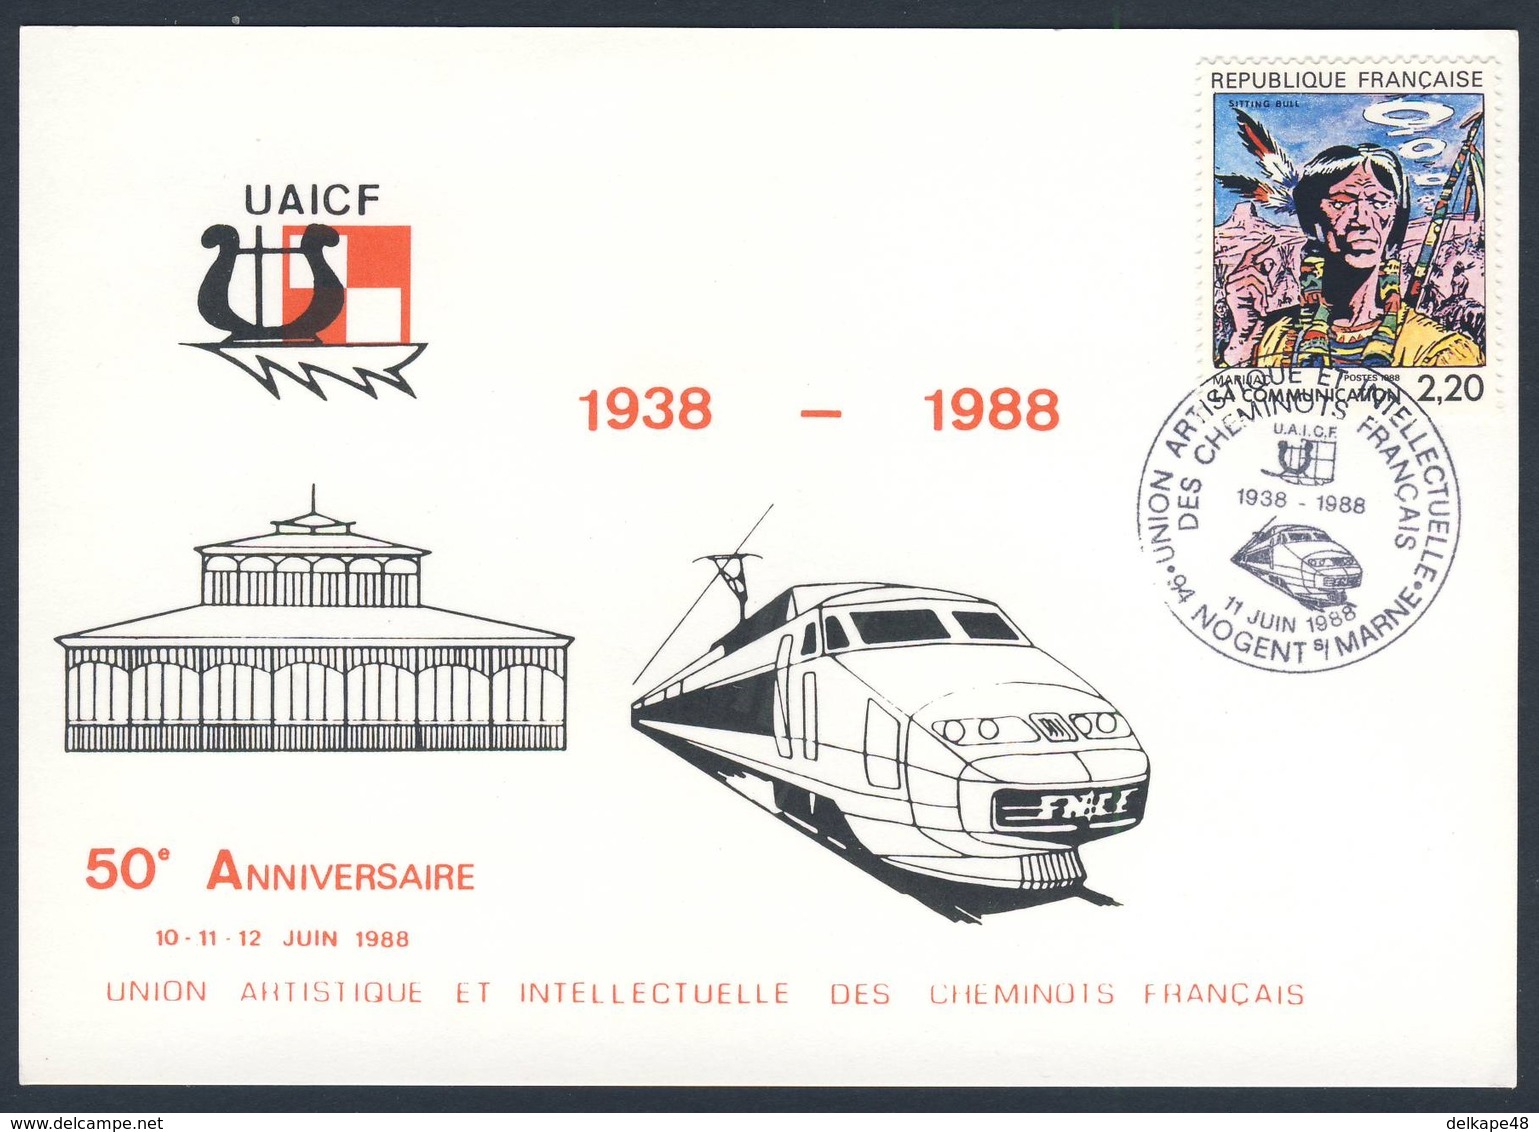 France Rep. Française 1988 Postcard Postkarte Carte Postale - 50e Ann. UAICF 1938-1988 - Union Artistique Intellectuelle - Eisenbahnen